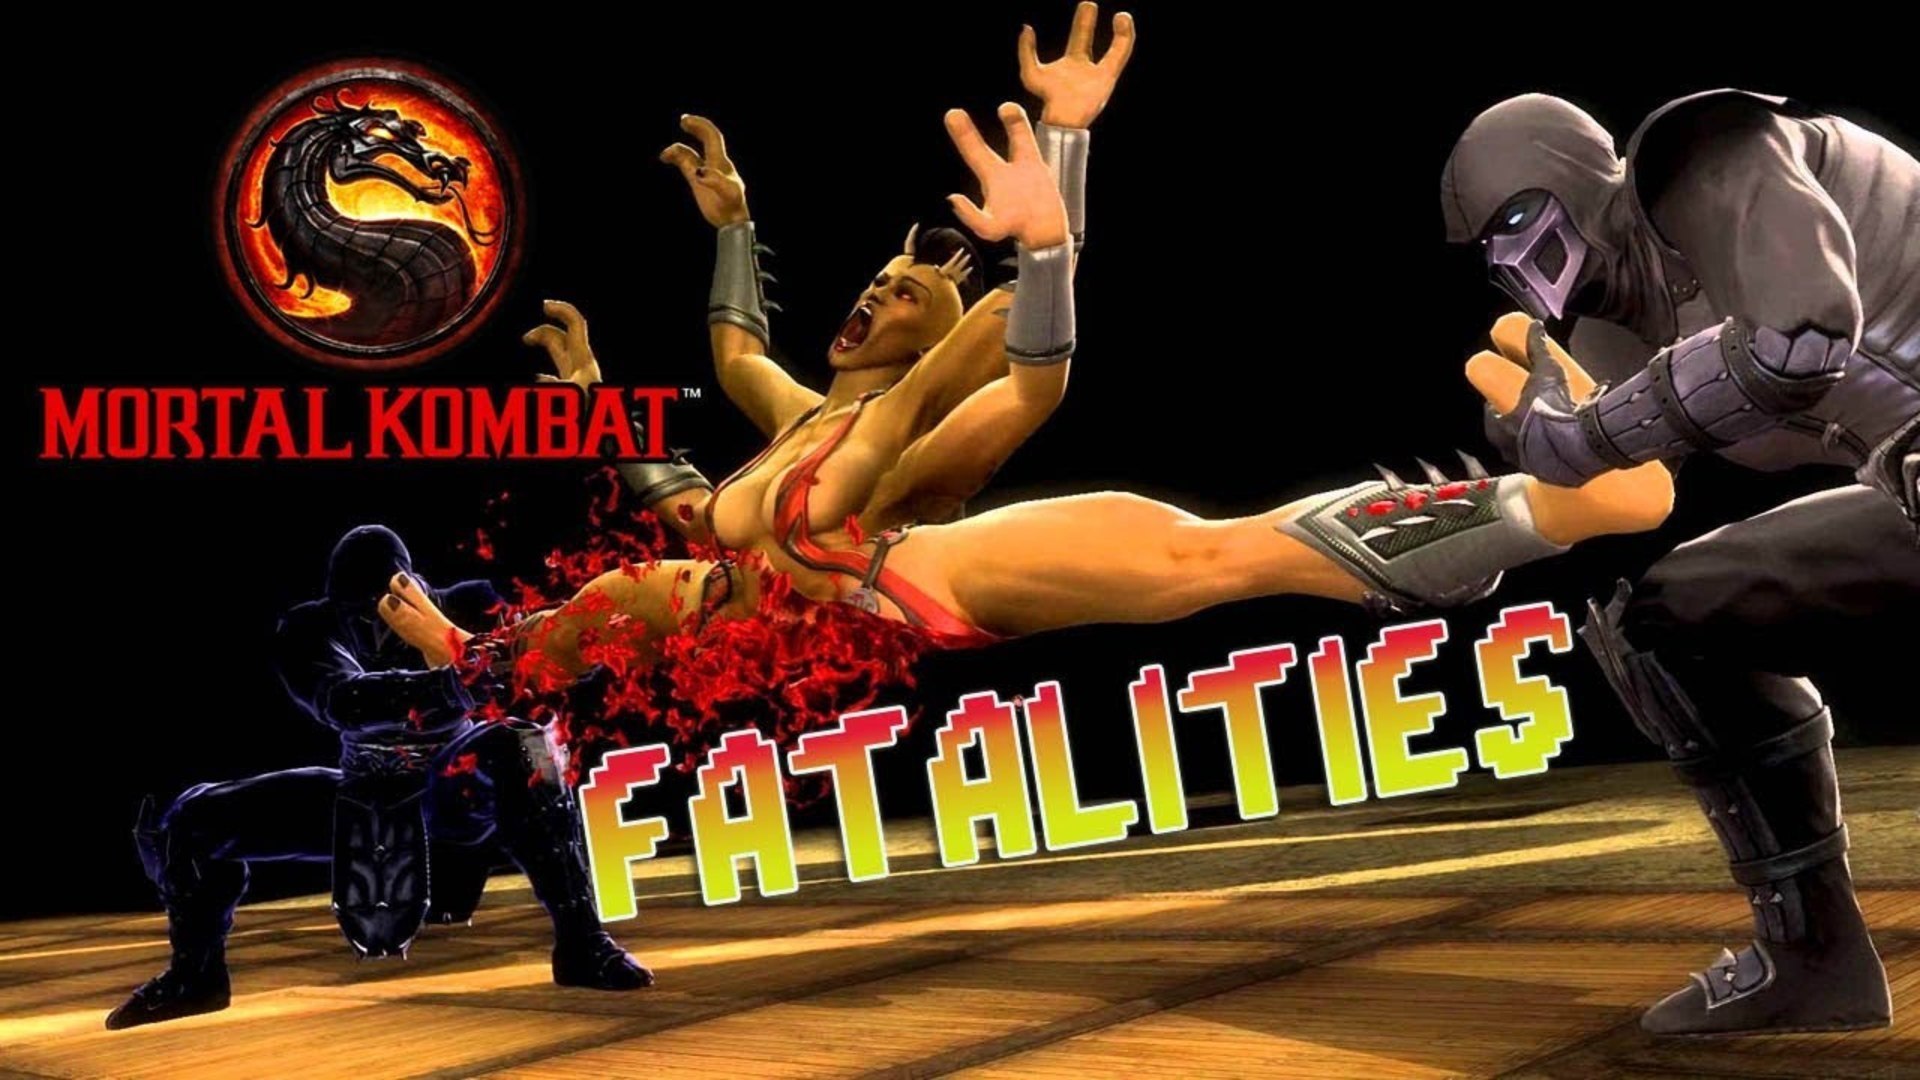 ⁣FINISH HIM! Top 10 Mortal Kombat Fatalities of All Time